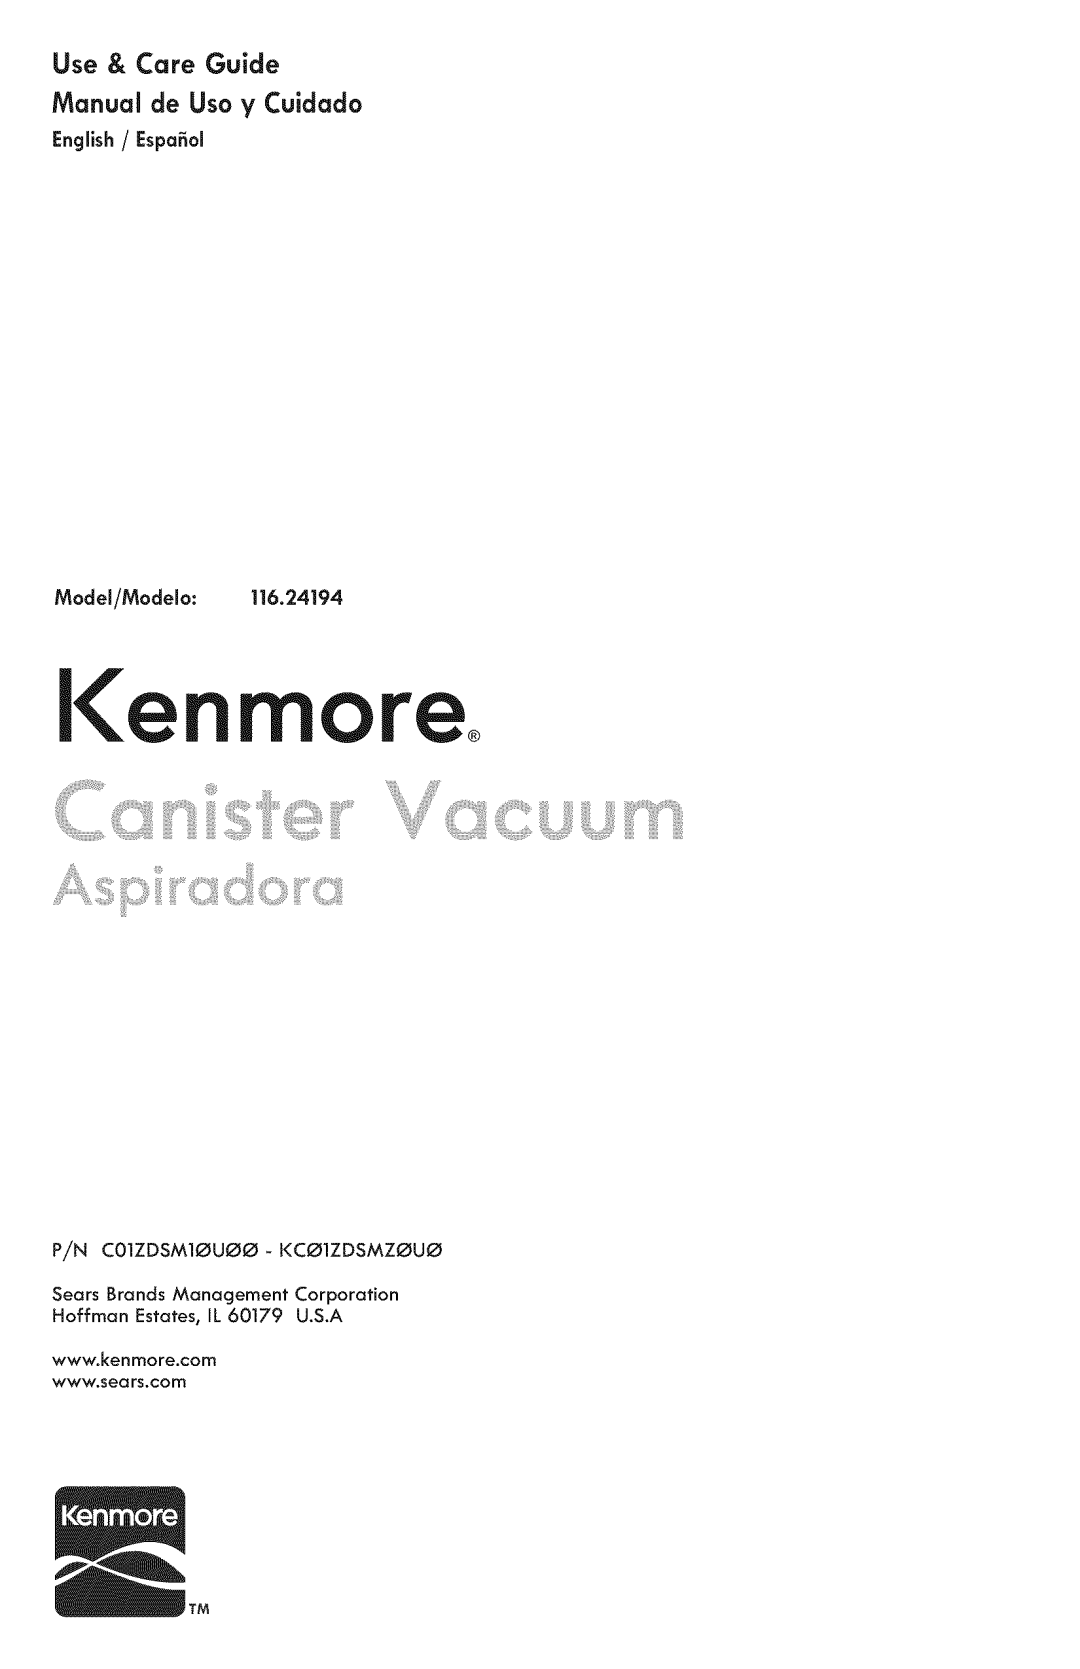 Kenmore 116.24194 manual Use & Care Guide Manual de Use ¥ Cuidado, English / Espa ol Model/Modelo 